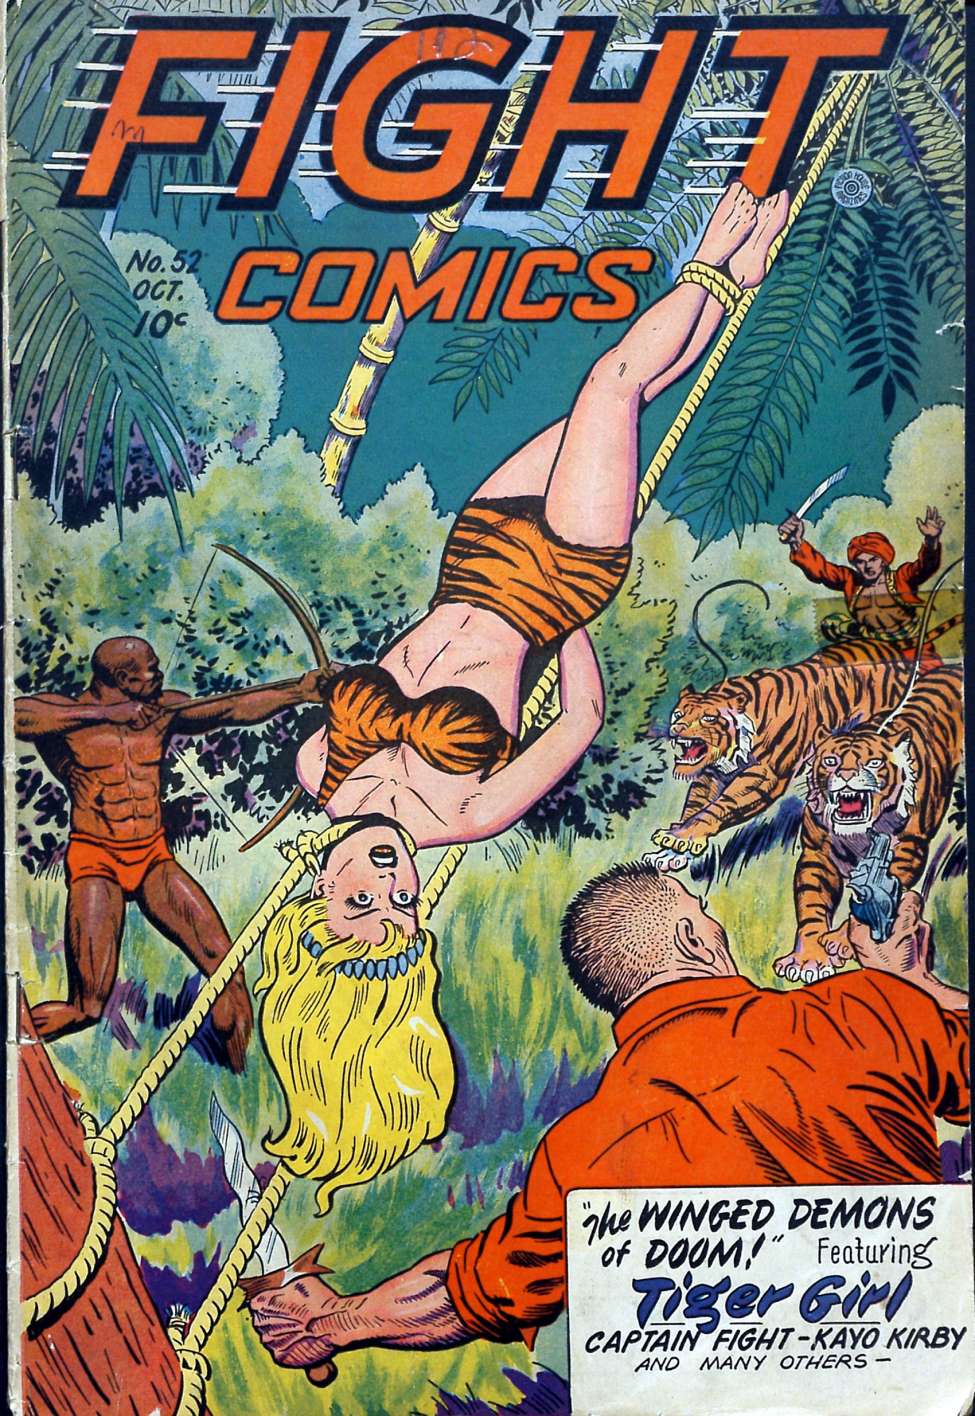 Comic Book Cover For Fight Comics 52 (alt) - Version 2